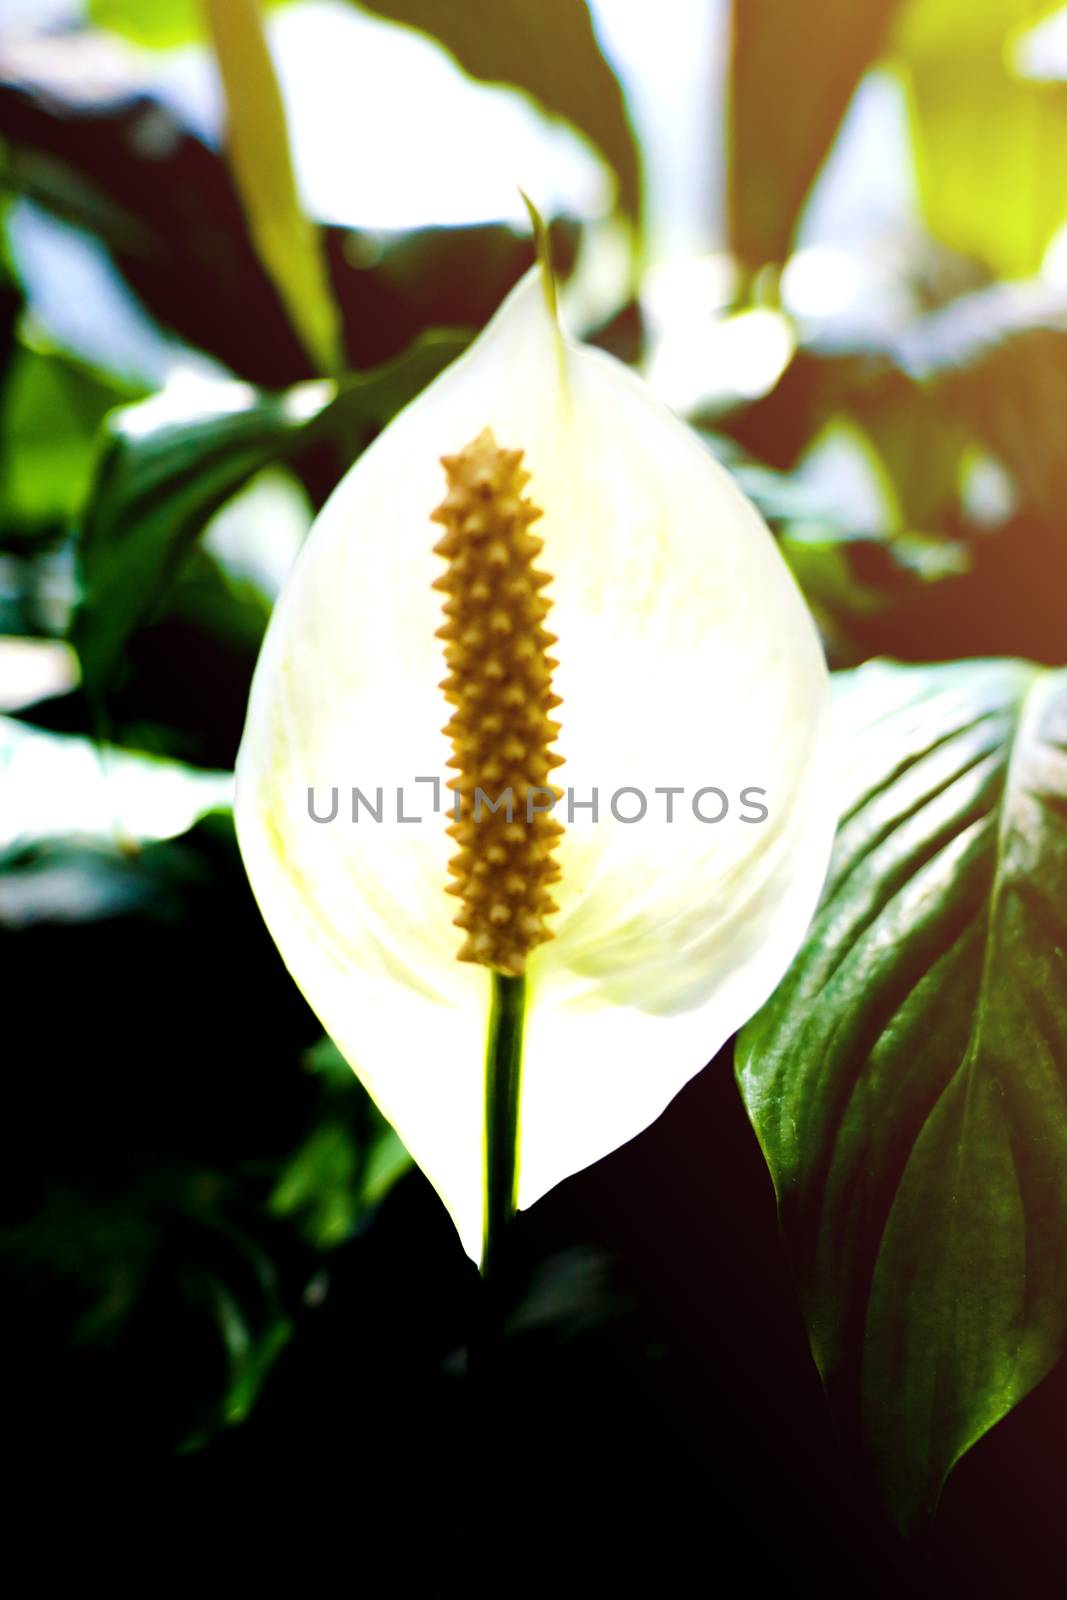 Anthurium Plant. Scientifically this flower is known as Anthurium andraeanum